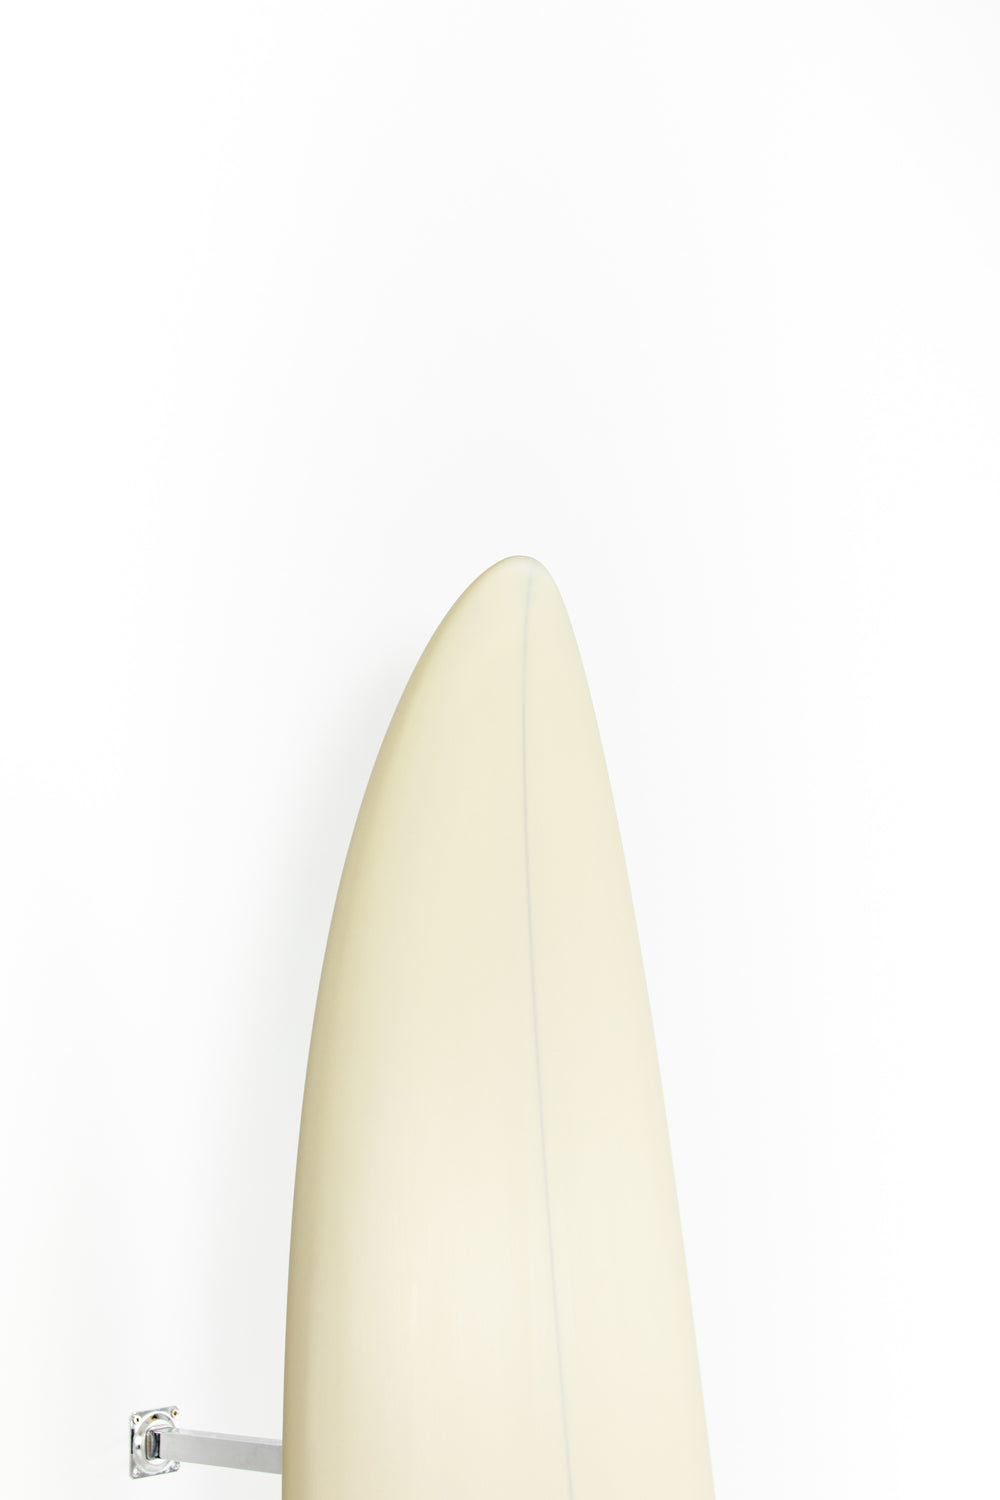 Joshua Keogh Surfboard - M2 6'8